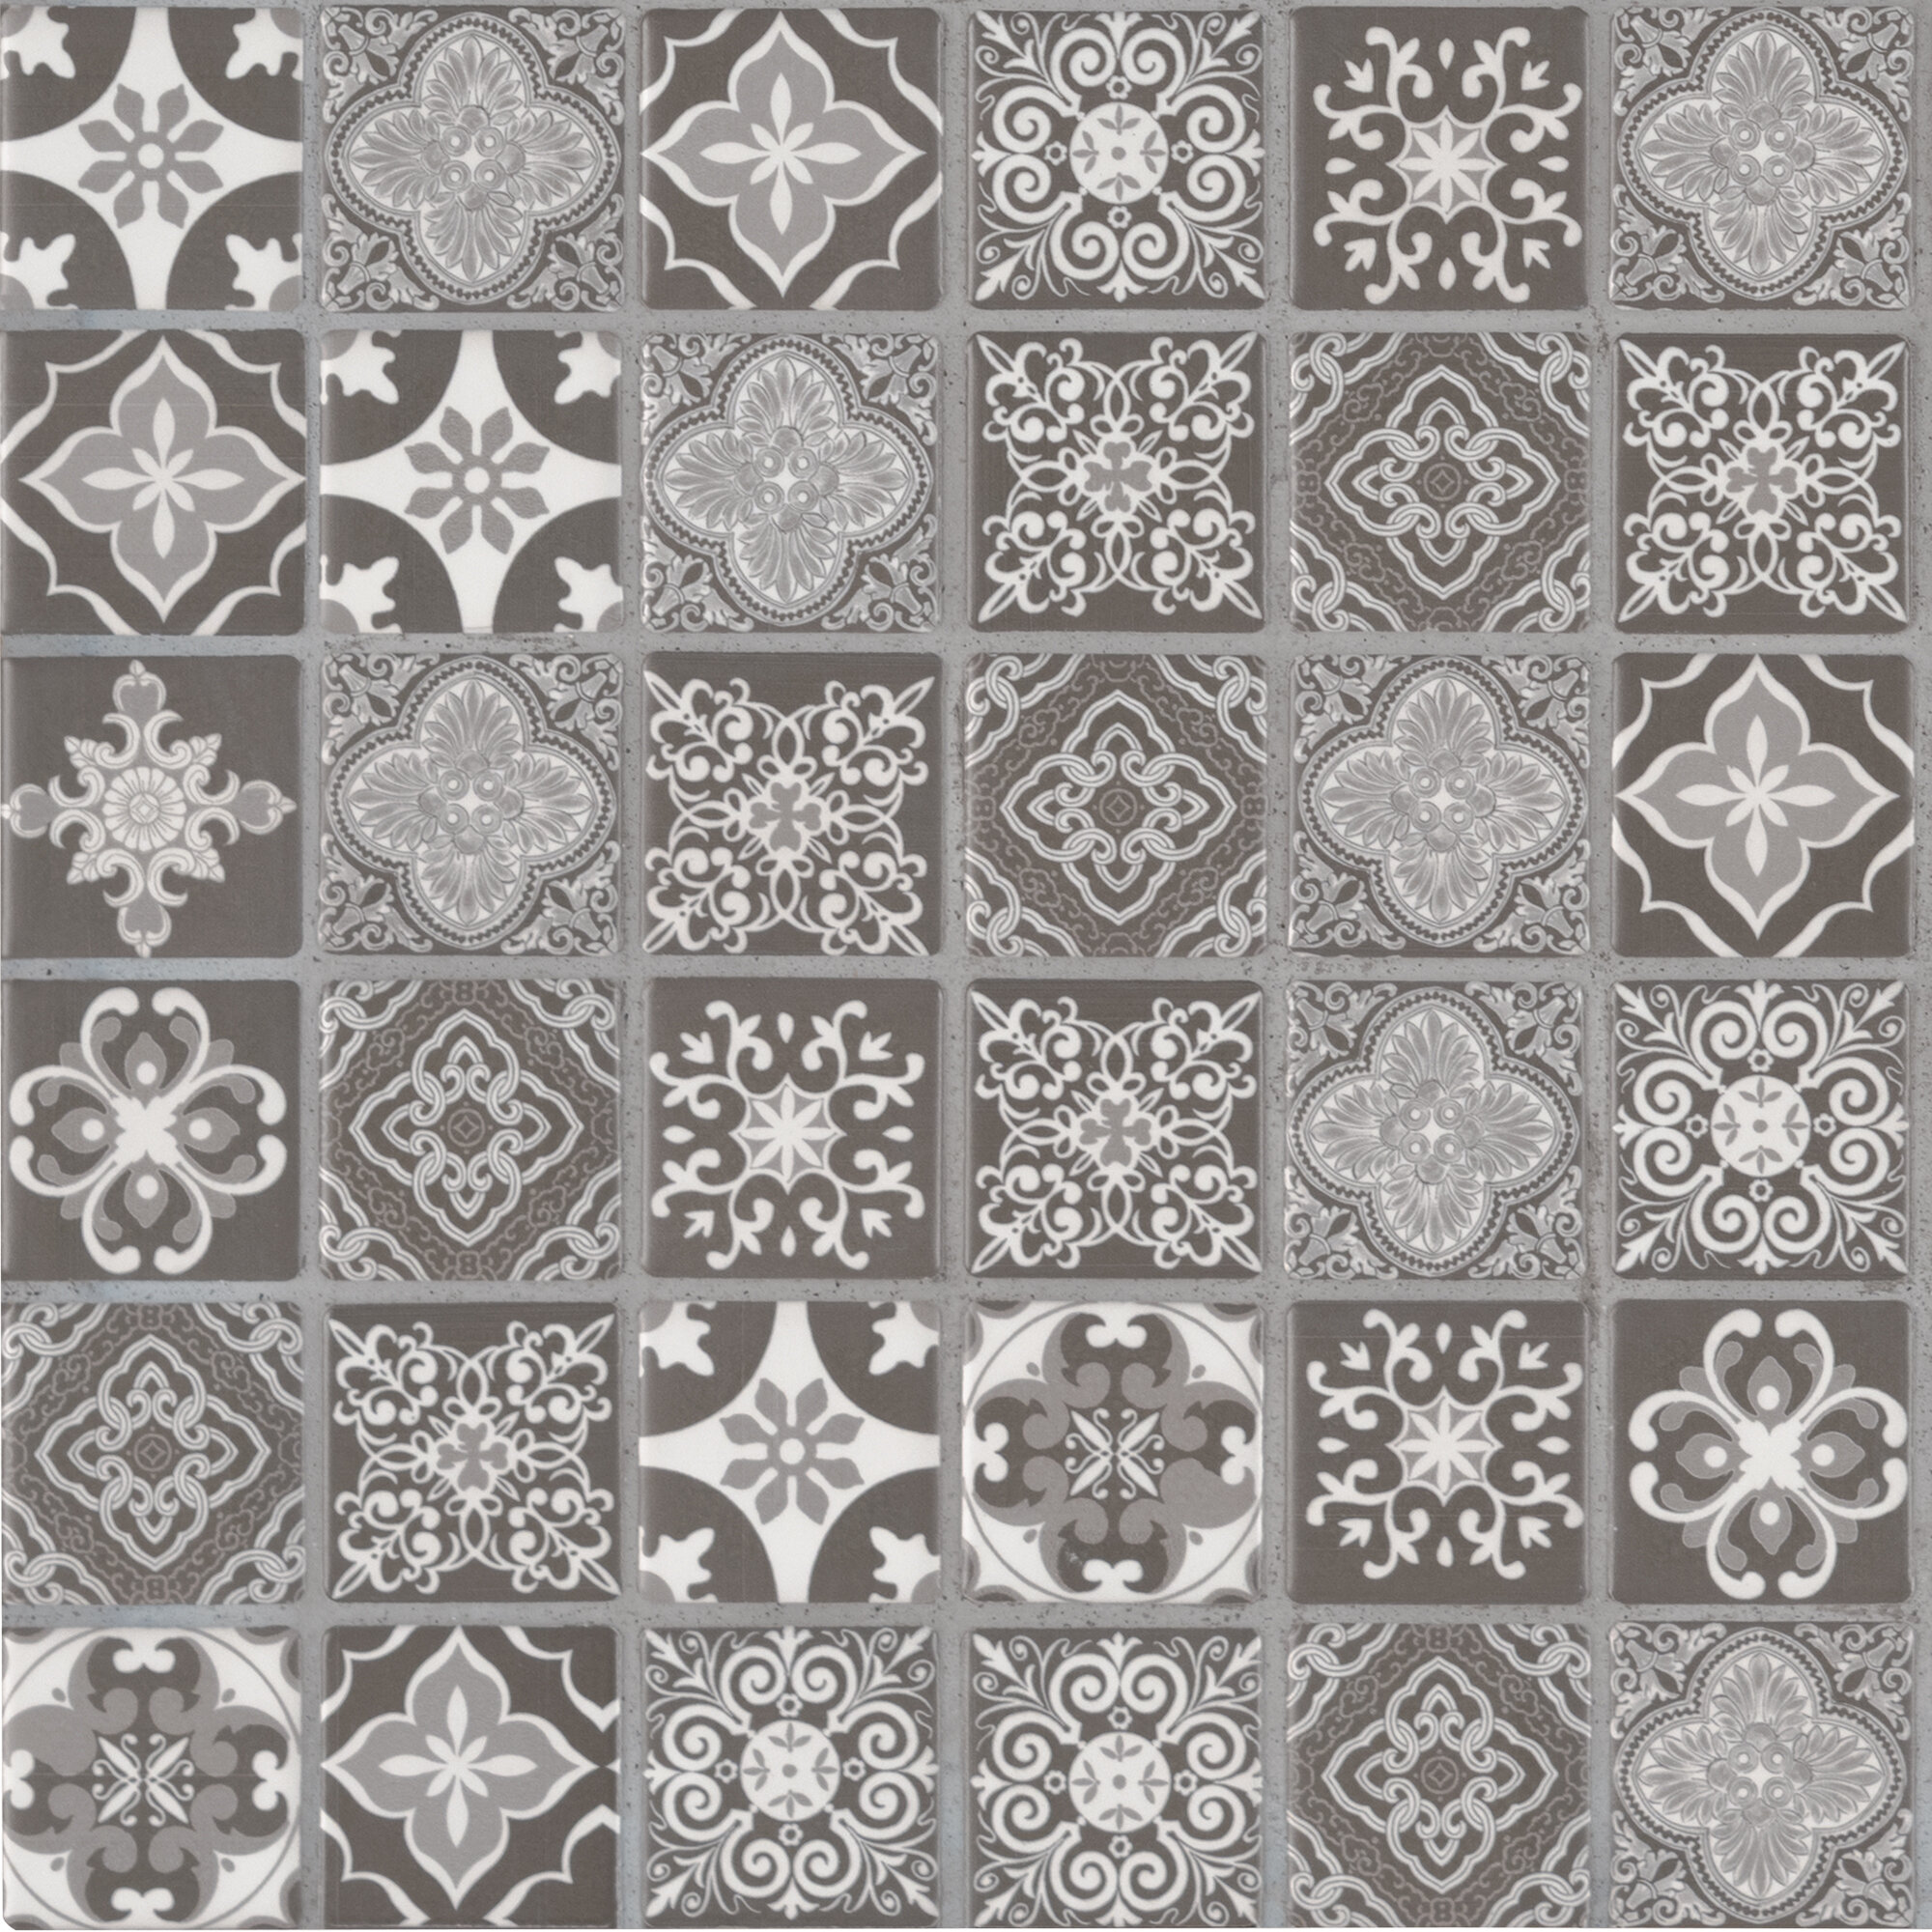 Graphic Tile Mosaic Square 70 S00 - Women - Accessories